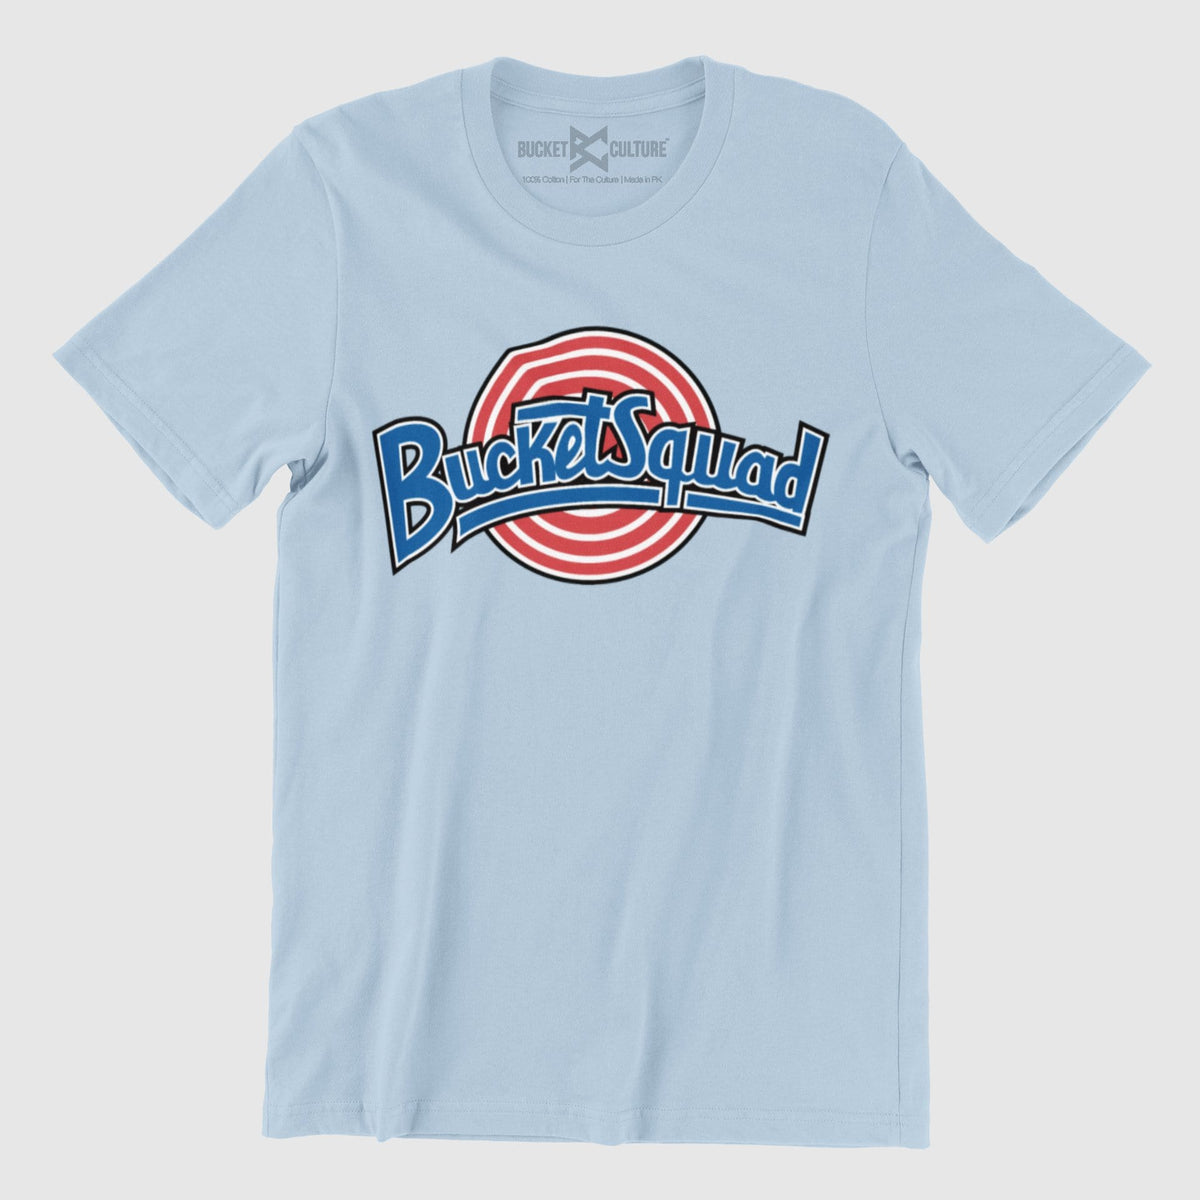 Bucket Squad T-Shirt